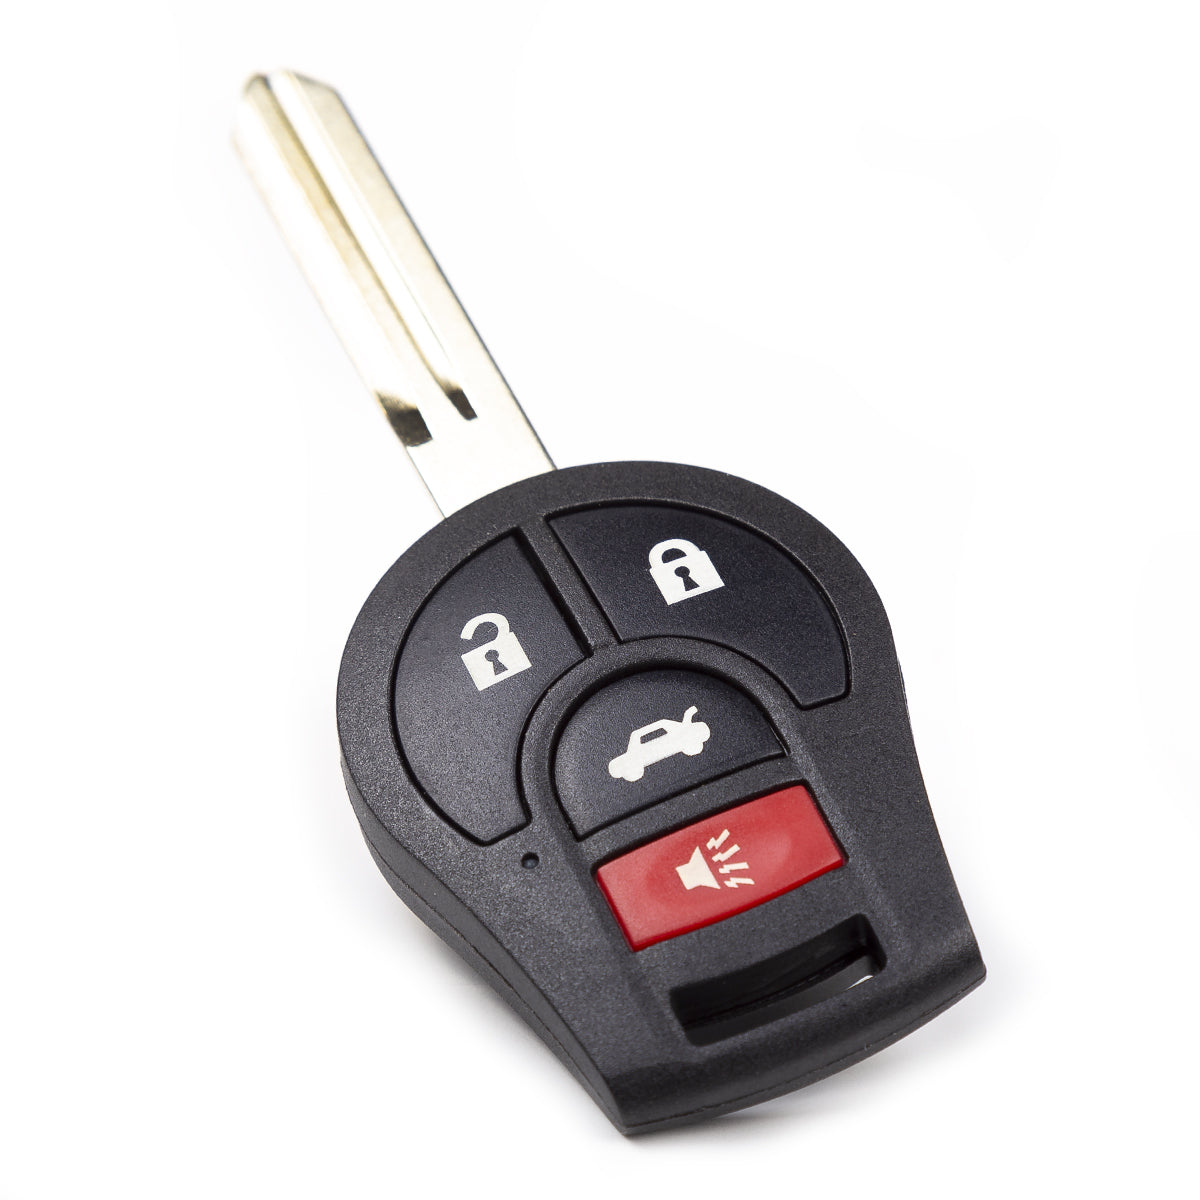 2006 Nissan Pathfinder Key Fob - Aftermarket - 4 Buttons Fob FCC# CWTWB1U751 - ID46 Chip